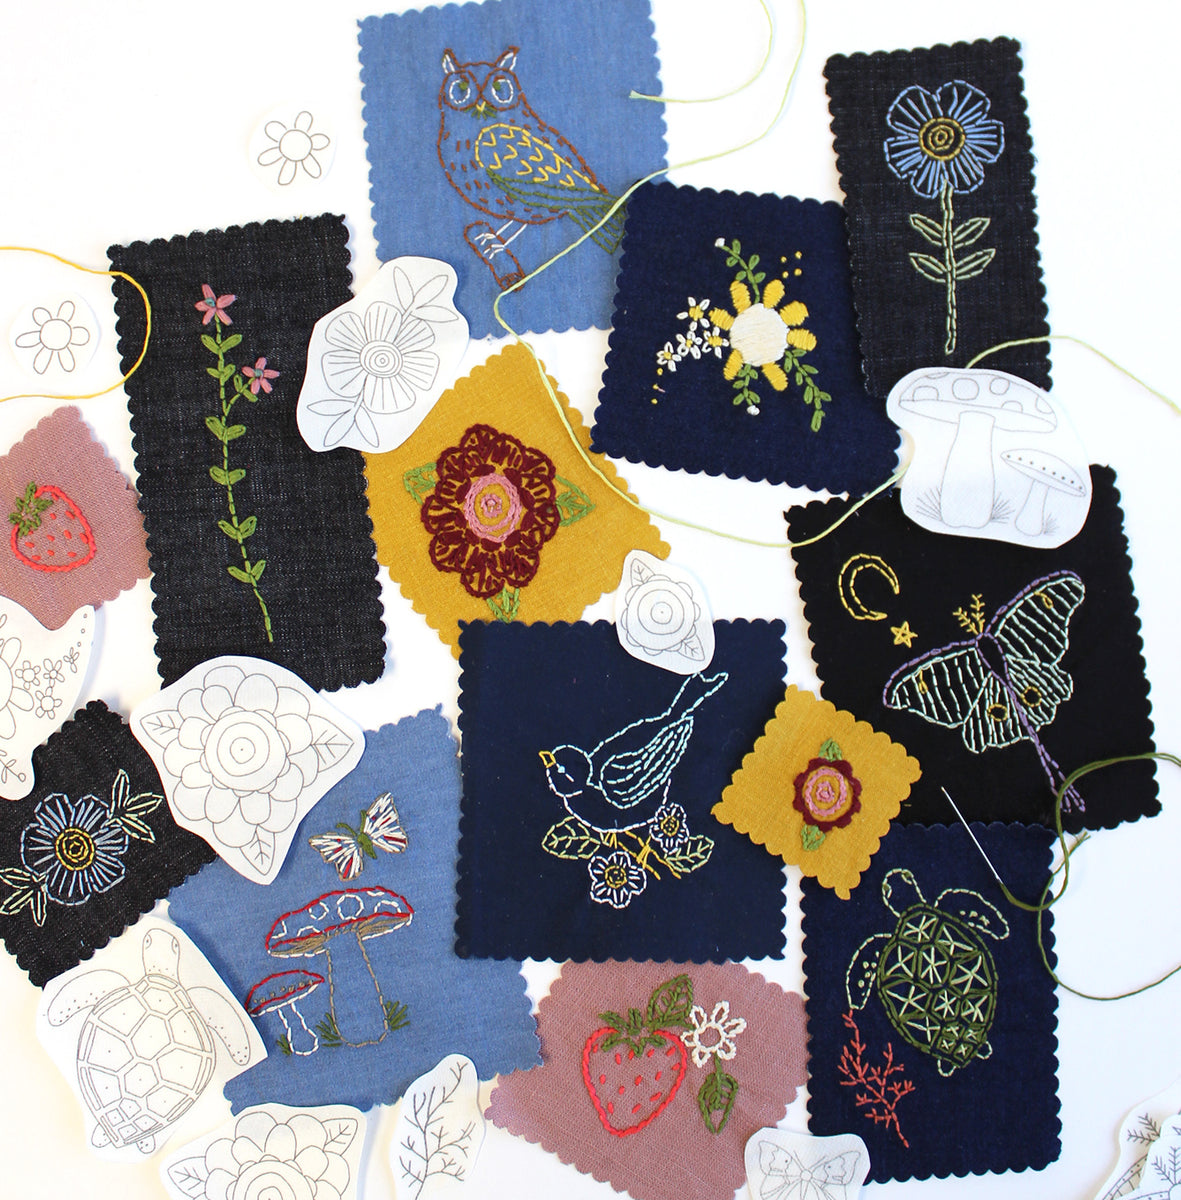 Blue Flowers Stick and Stitch Embroidery Kit – Jennifer Heynen